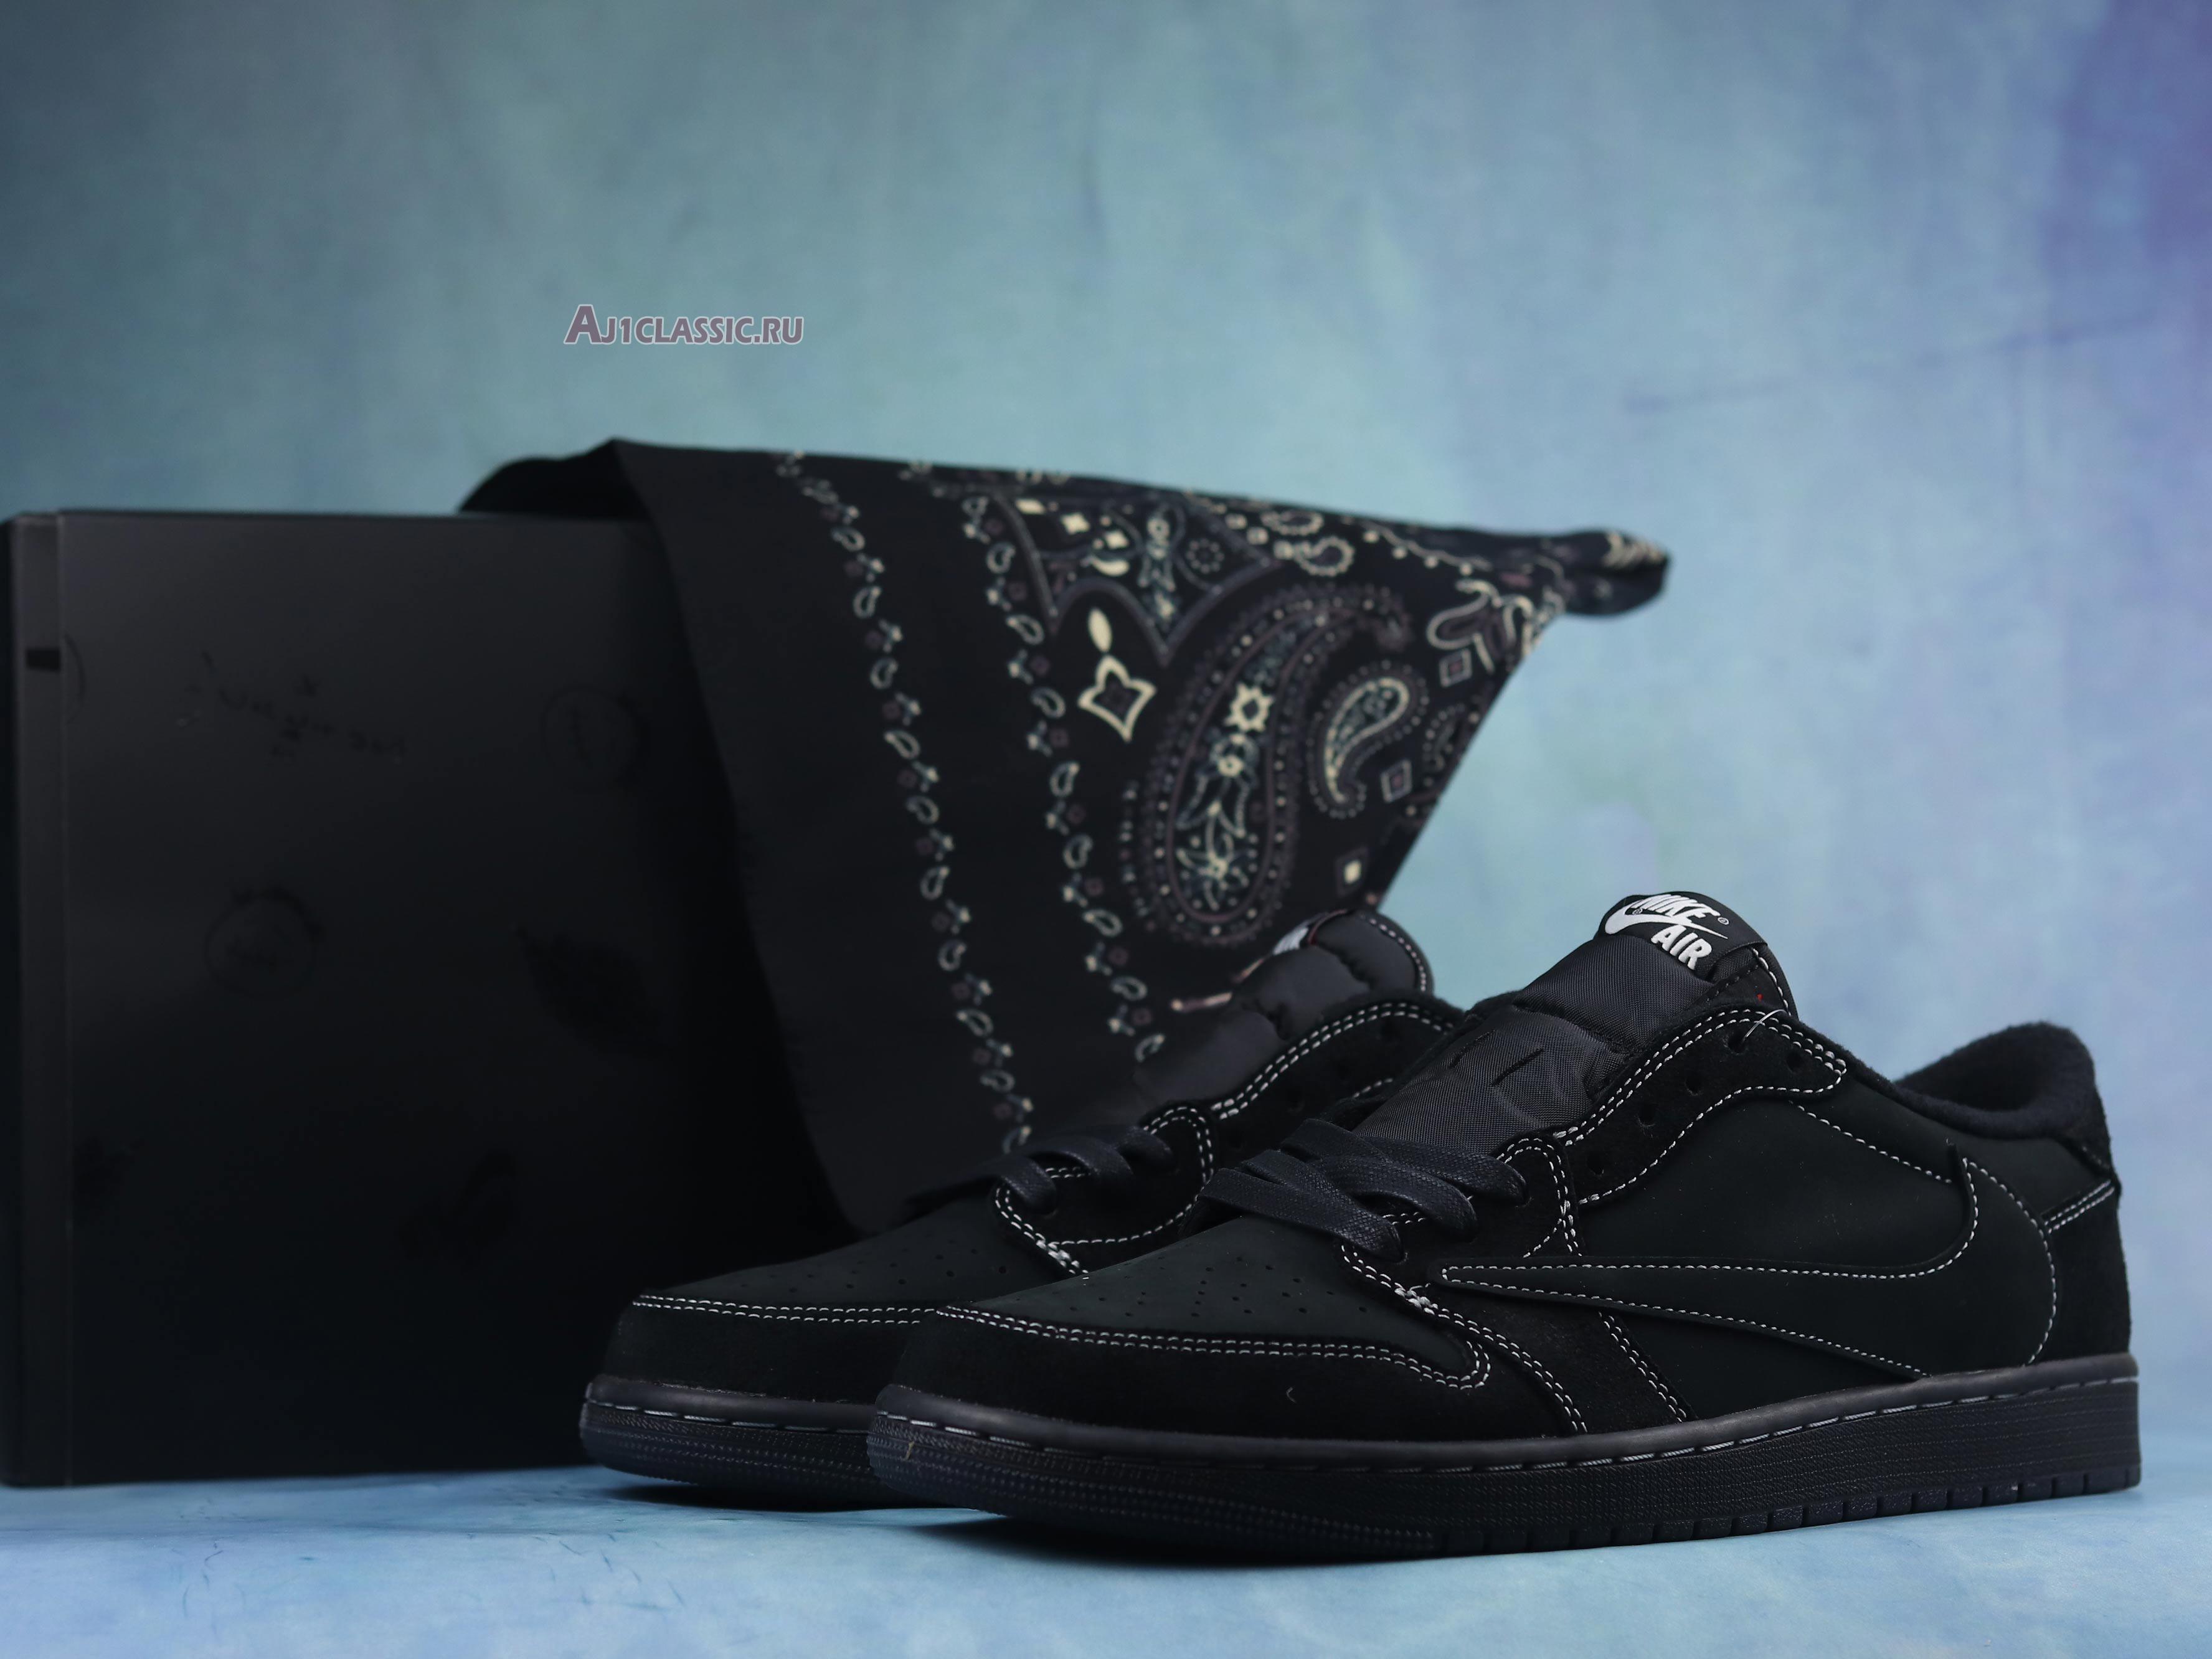 Travis Scott x Air Jordan 1 Low OG SP Black Phantom DM7866-001-02 Black/Phantom Sneakers